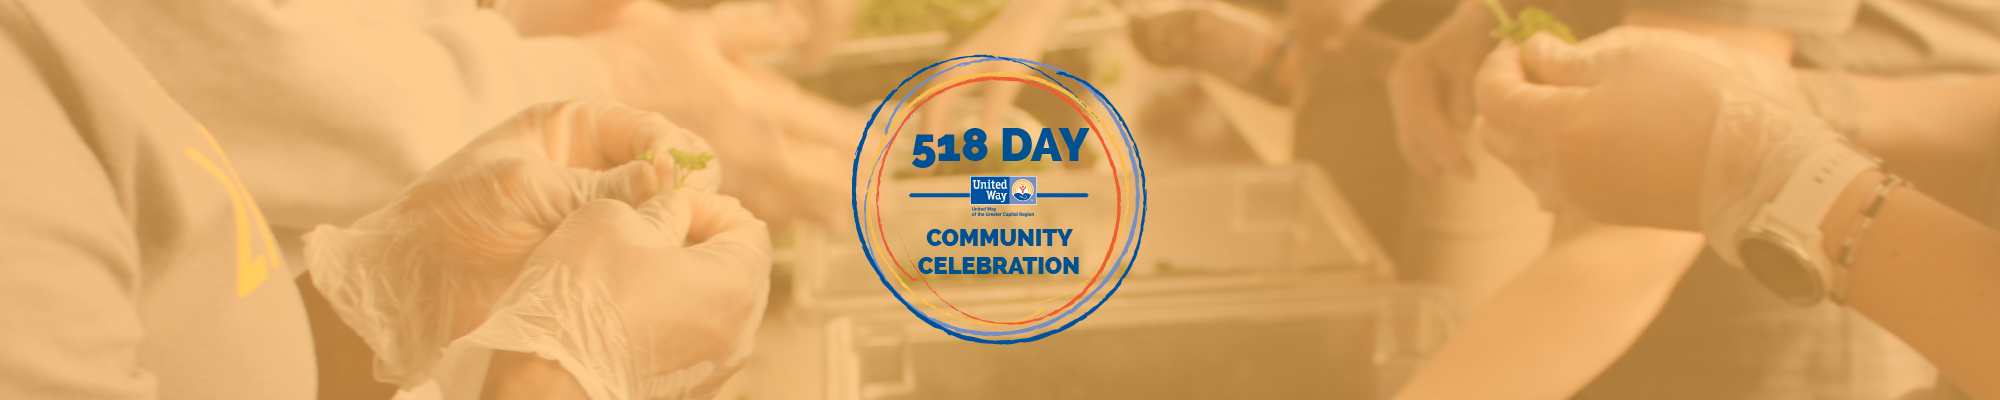 518 Day logo